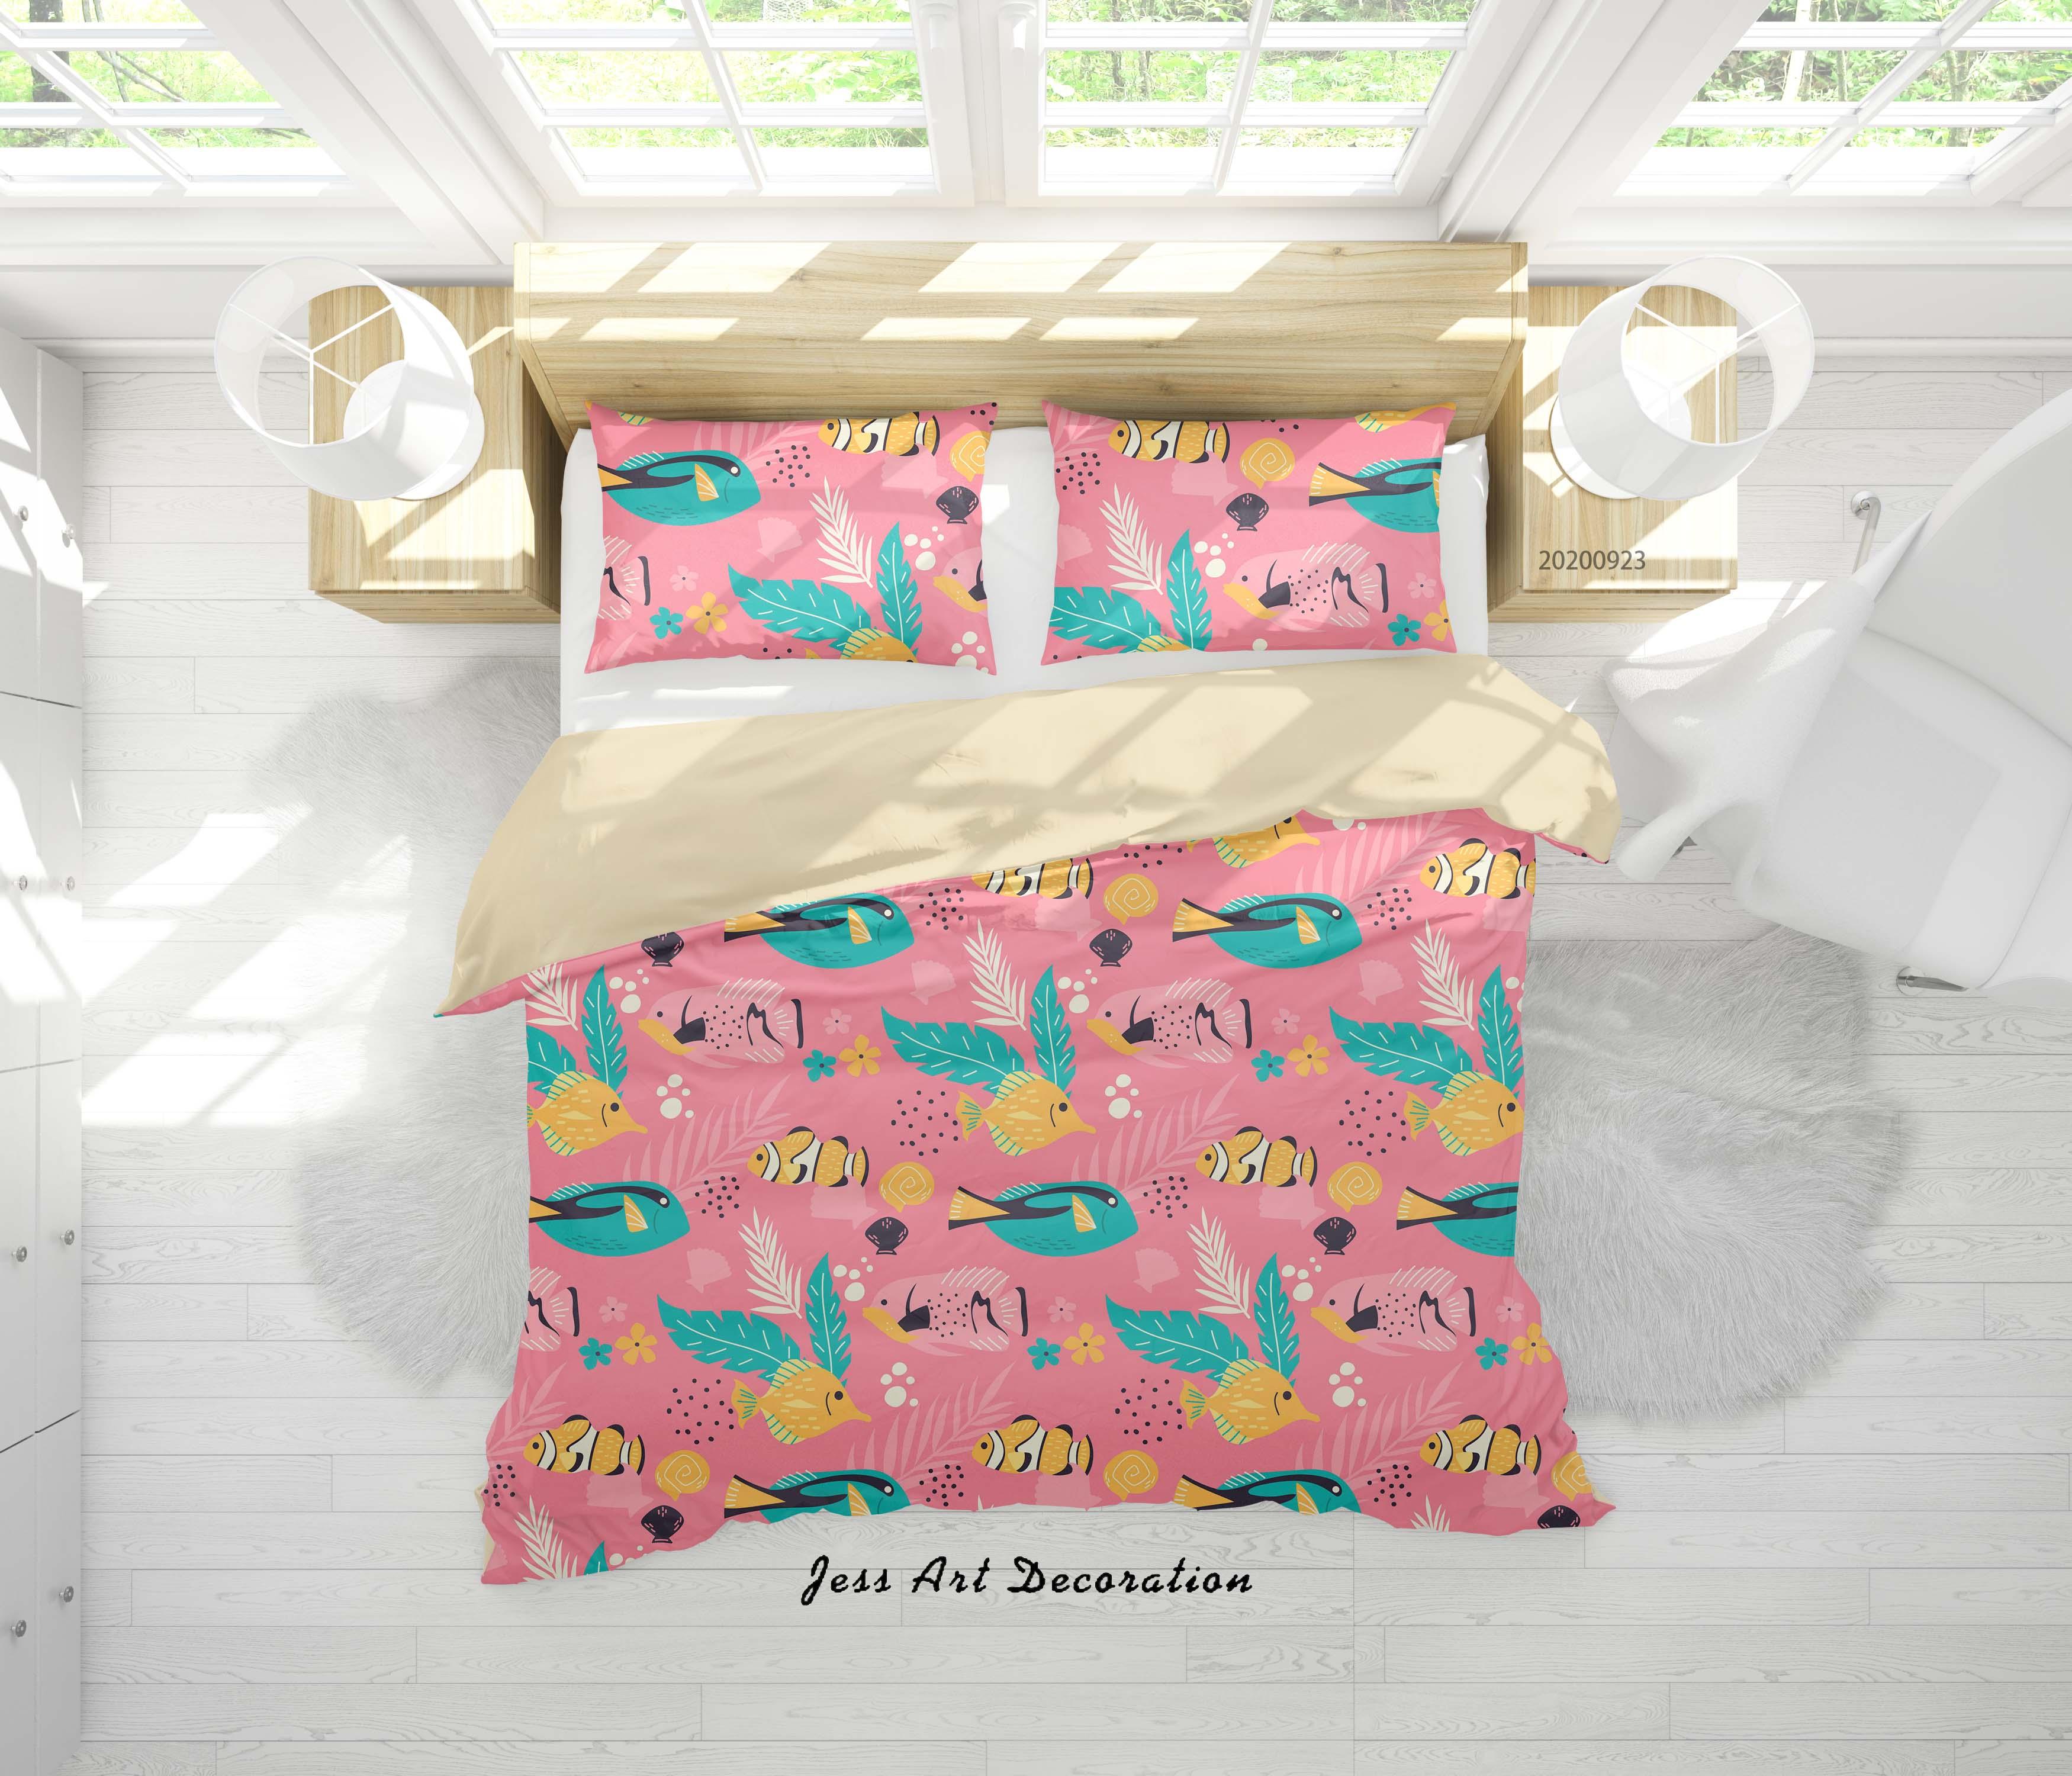 3D Cartoon Shell Fish Pattern Quilt Cover Set Bedding Set Duvet Cover Pillowcases WJ 6307- Jess Art Decoration